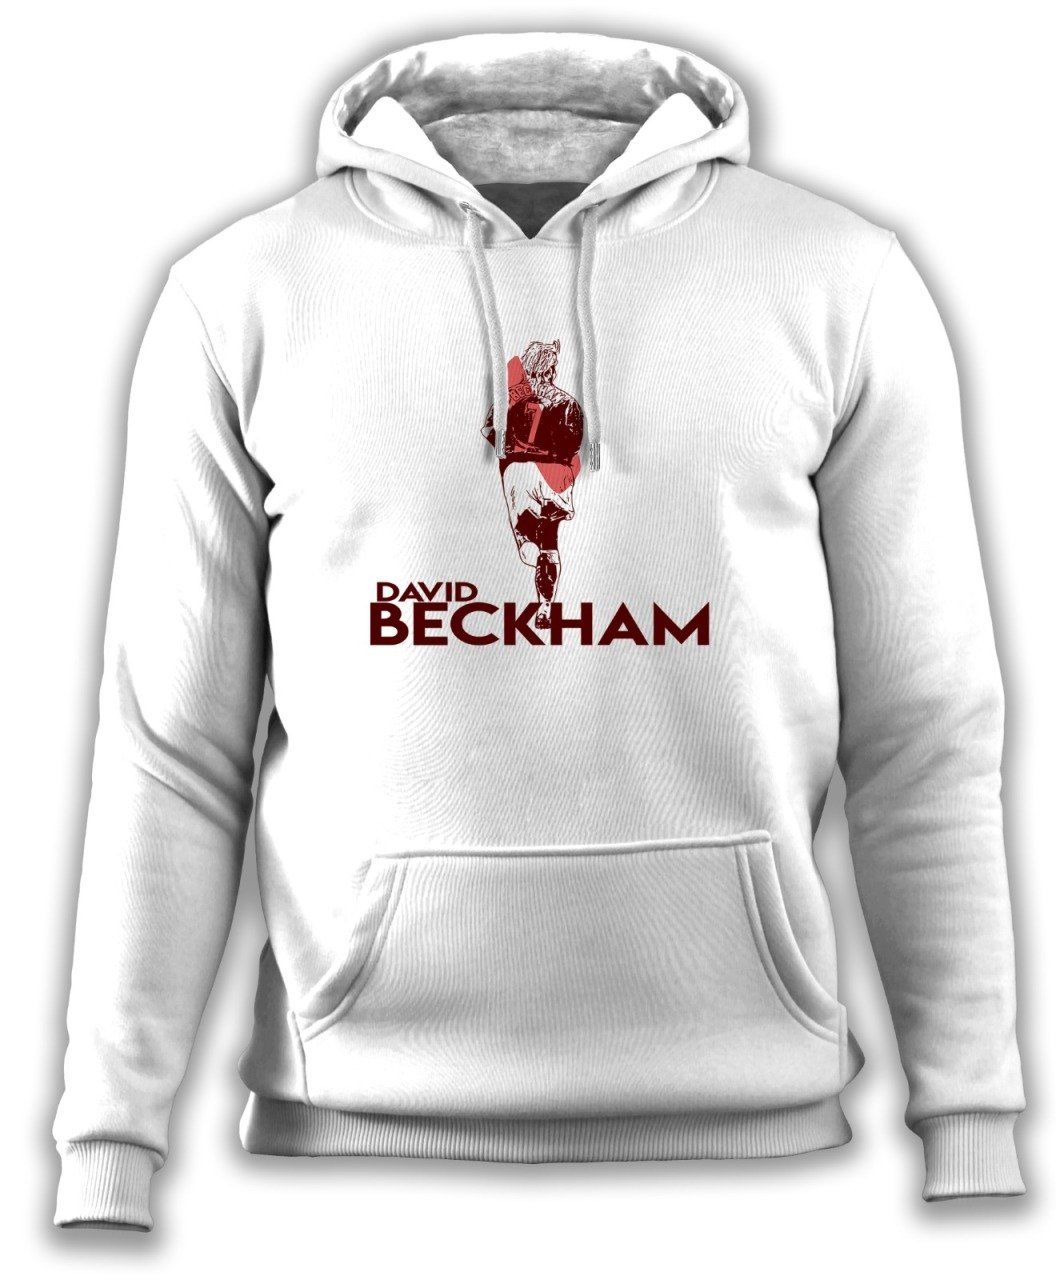 Beckham Sweatshirt